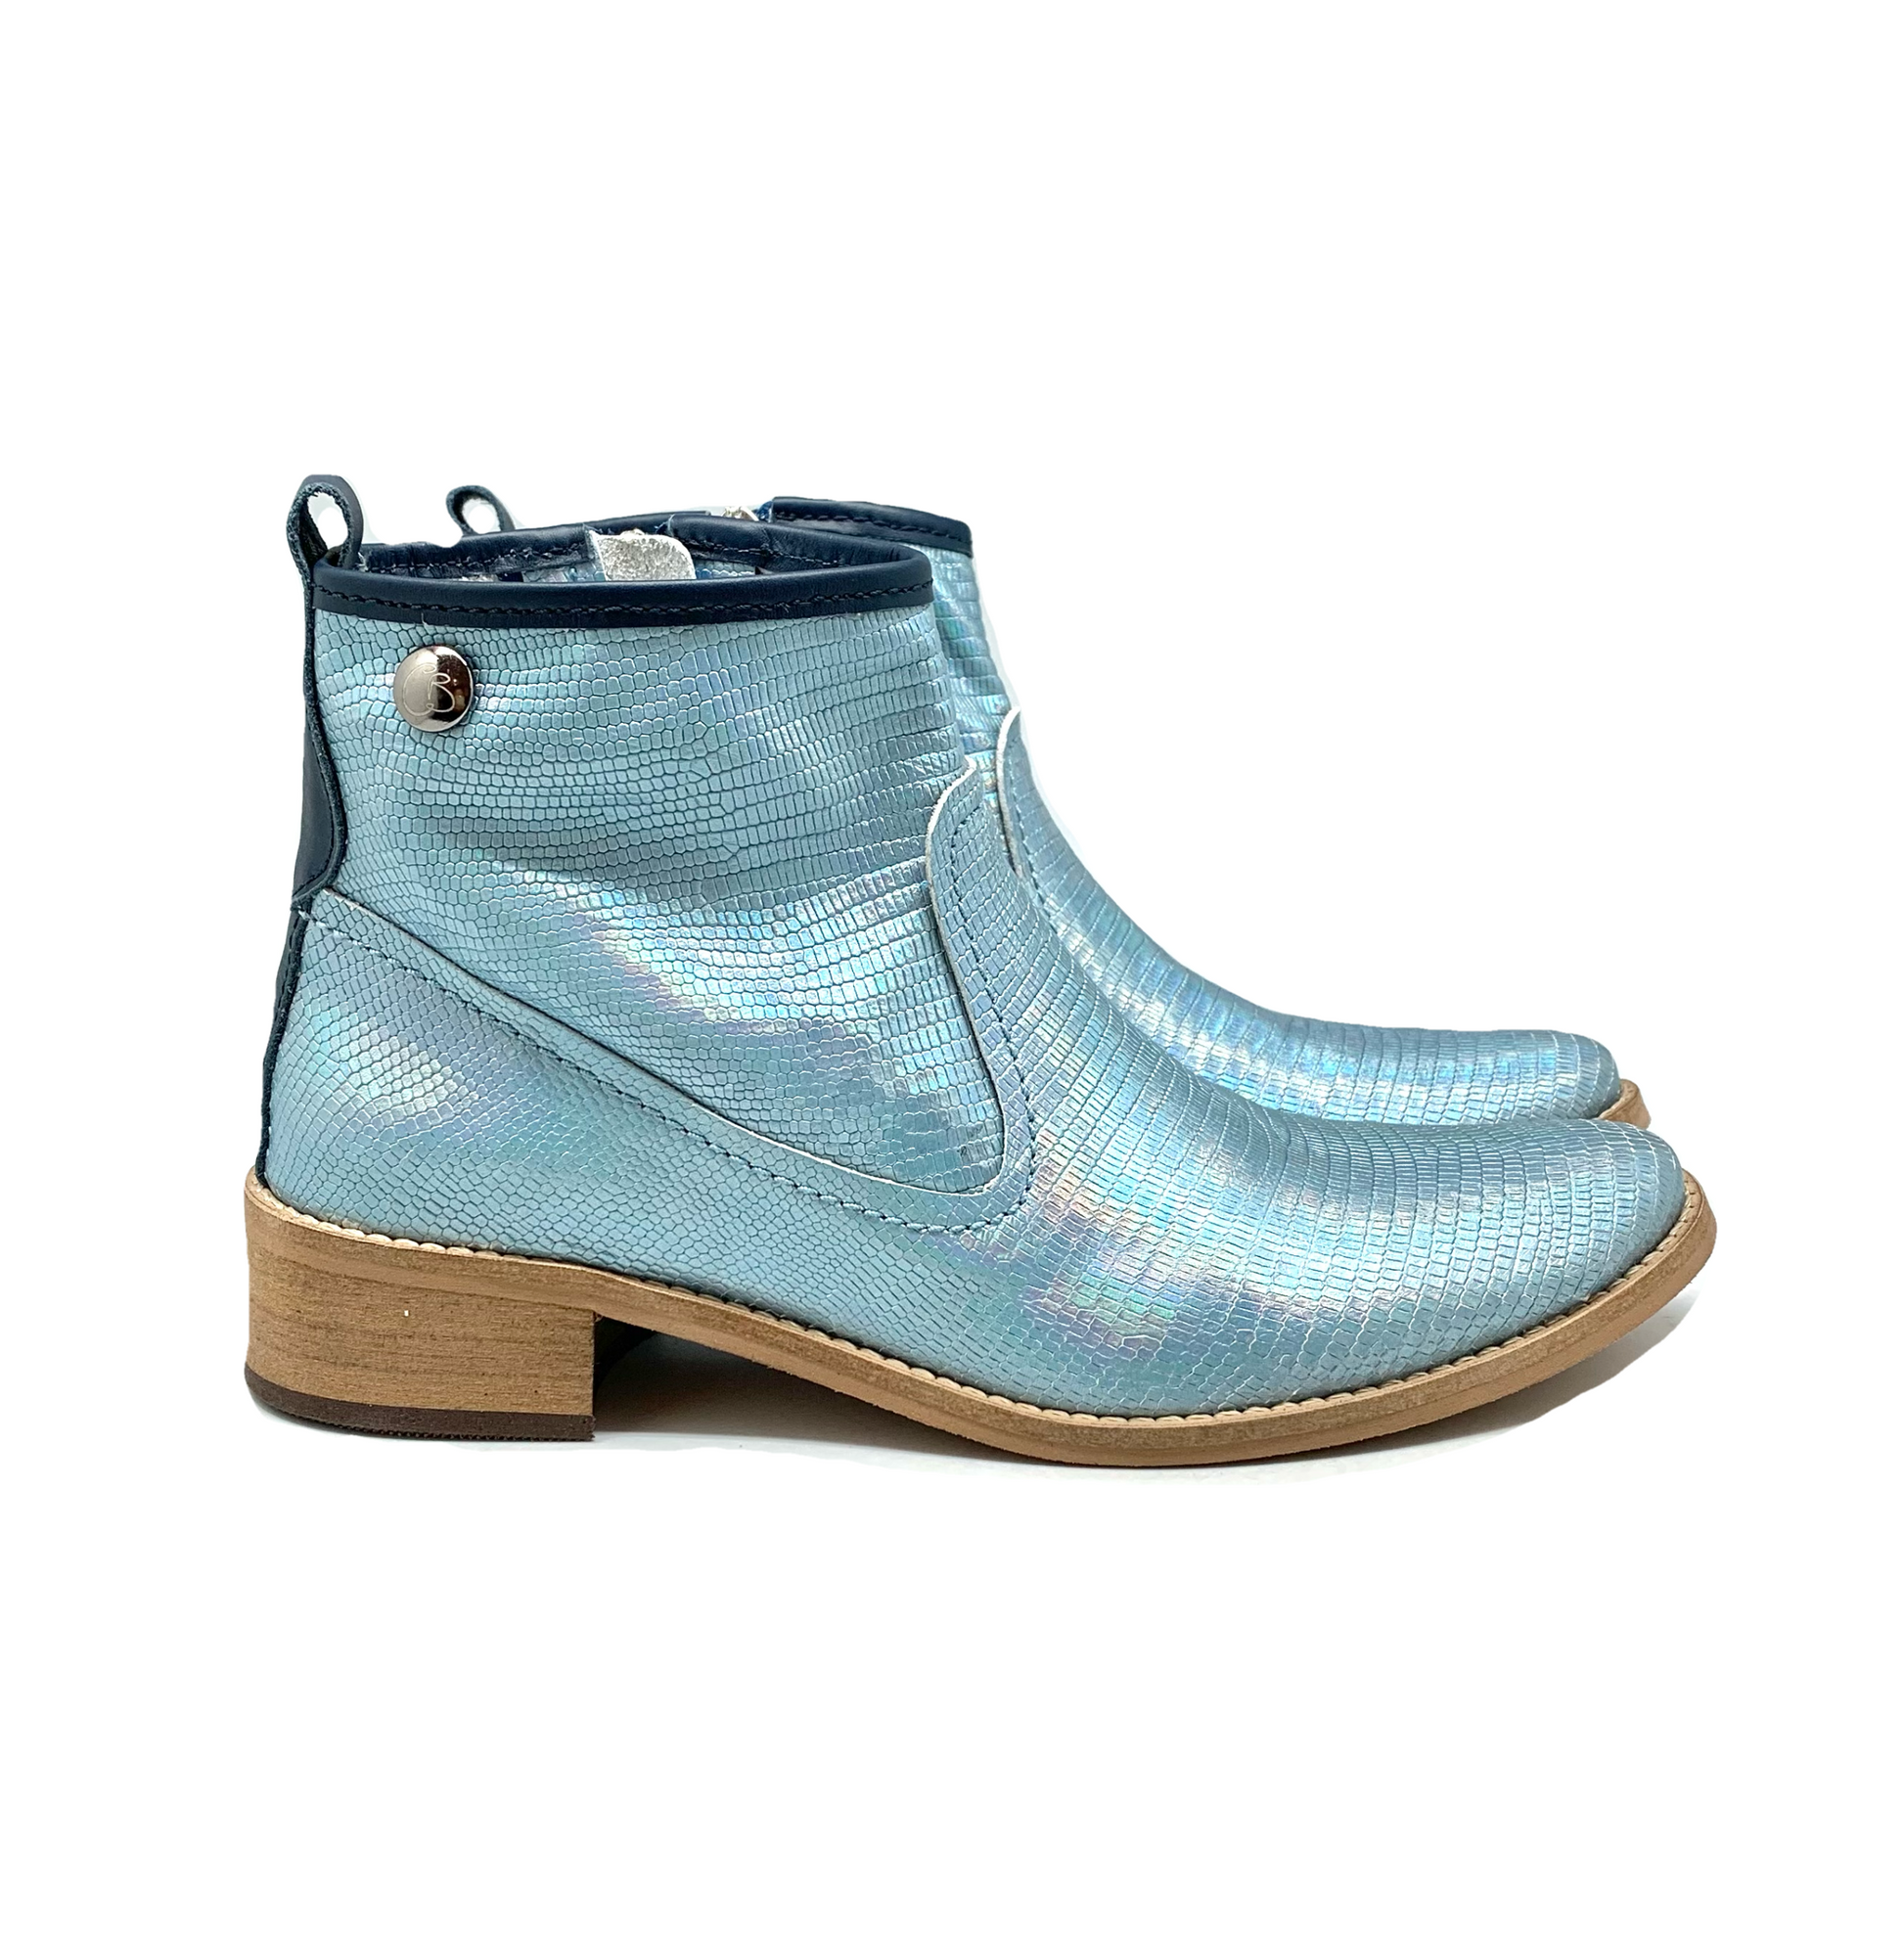 A pair of Designer Boots named Zipp - Ice Blue Iridescent